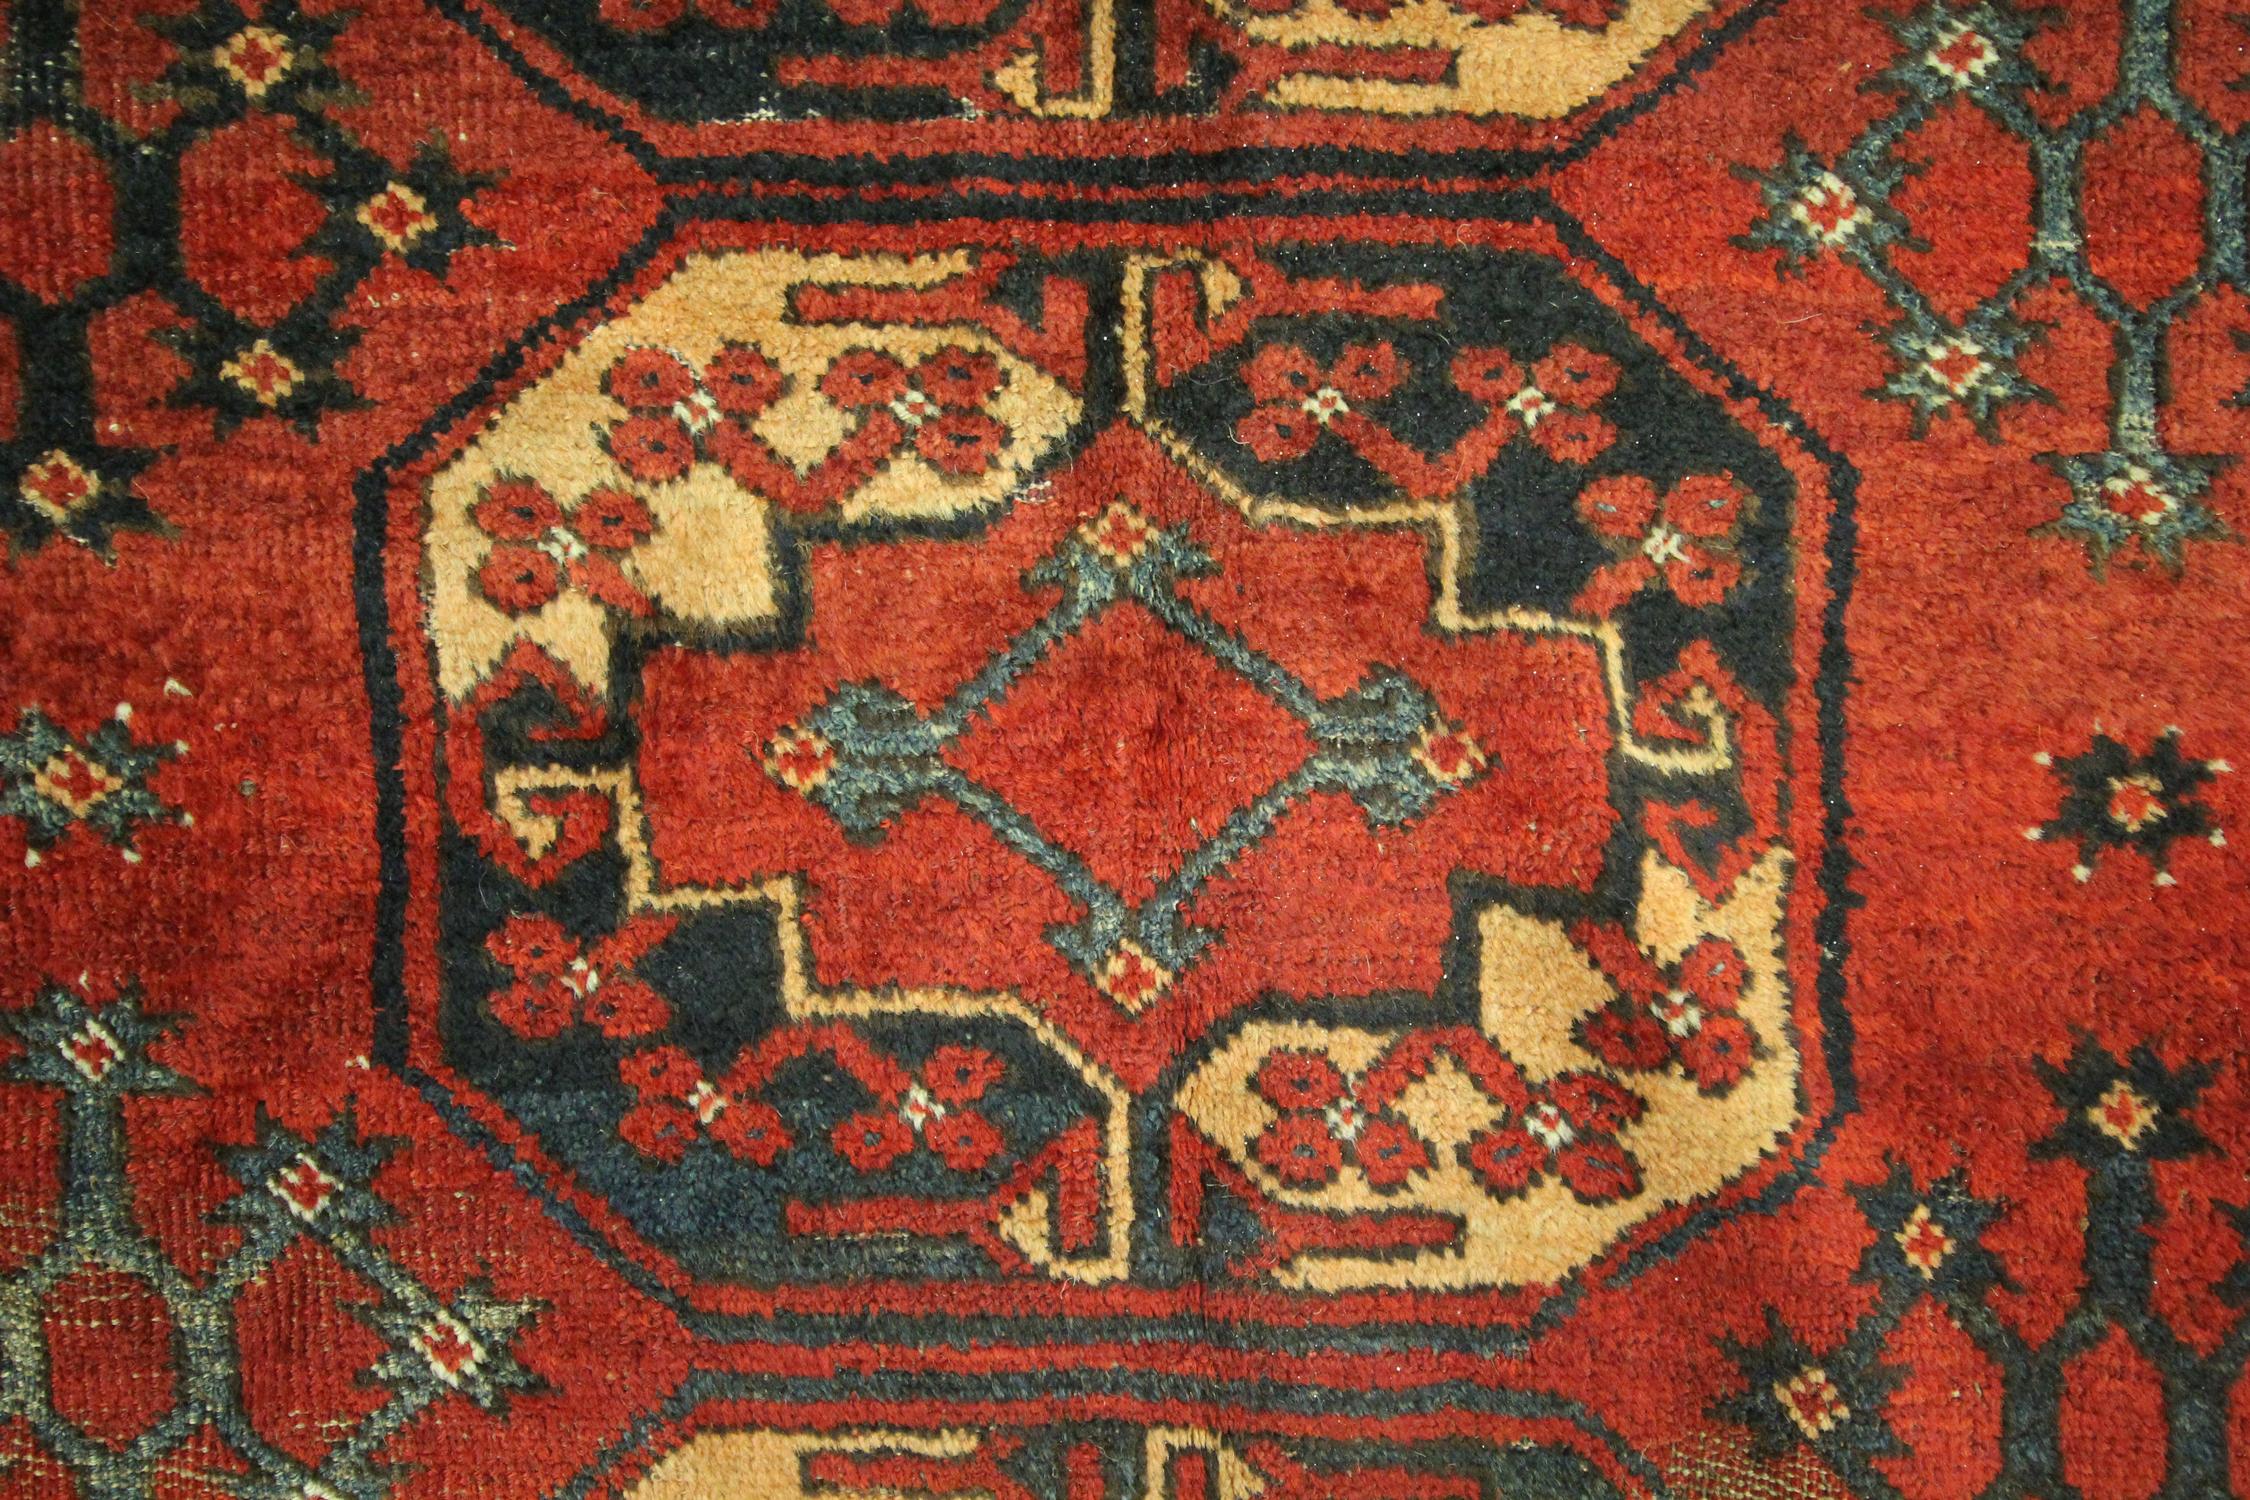 Woven Antique Rugs Turkmen Carpet Area Rug Handwoven Red Orange Wool Rug